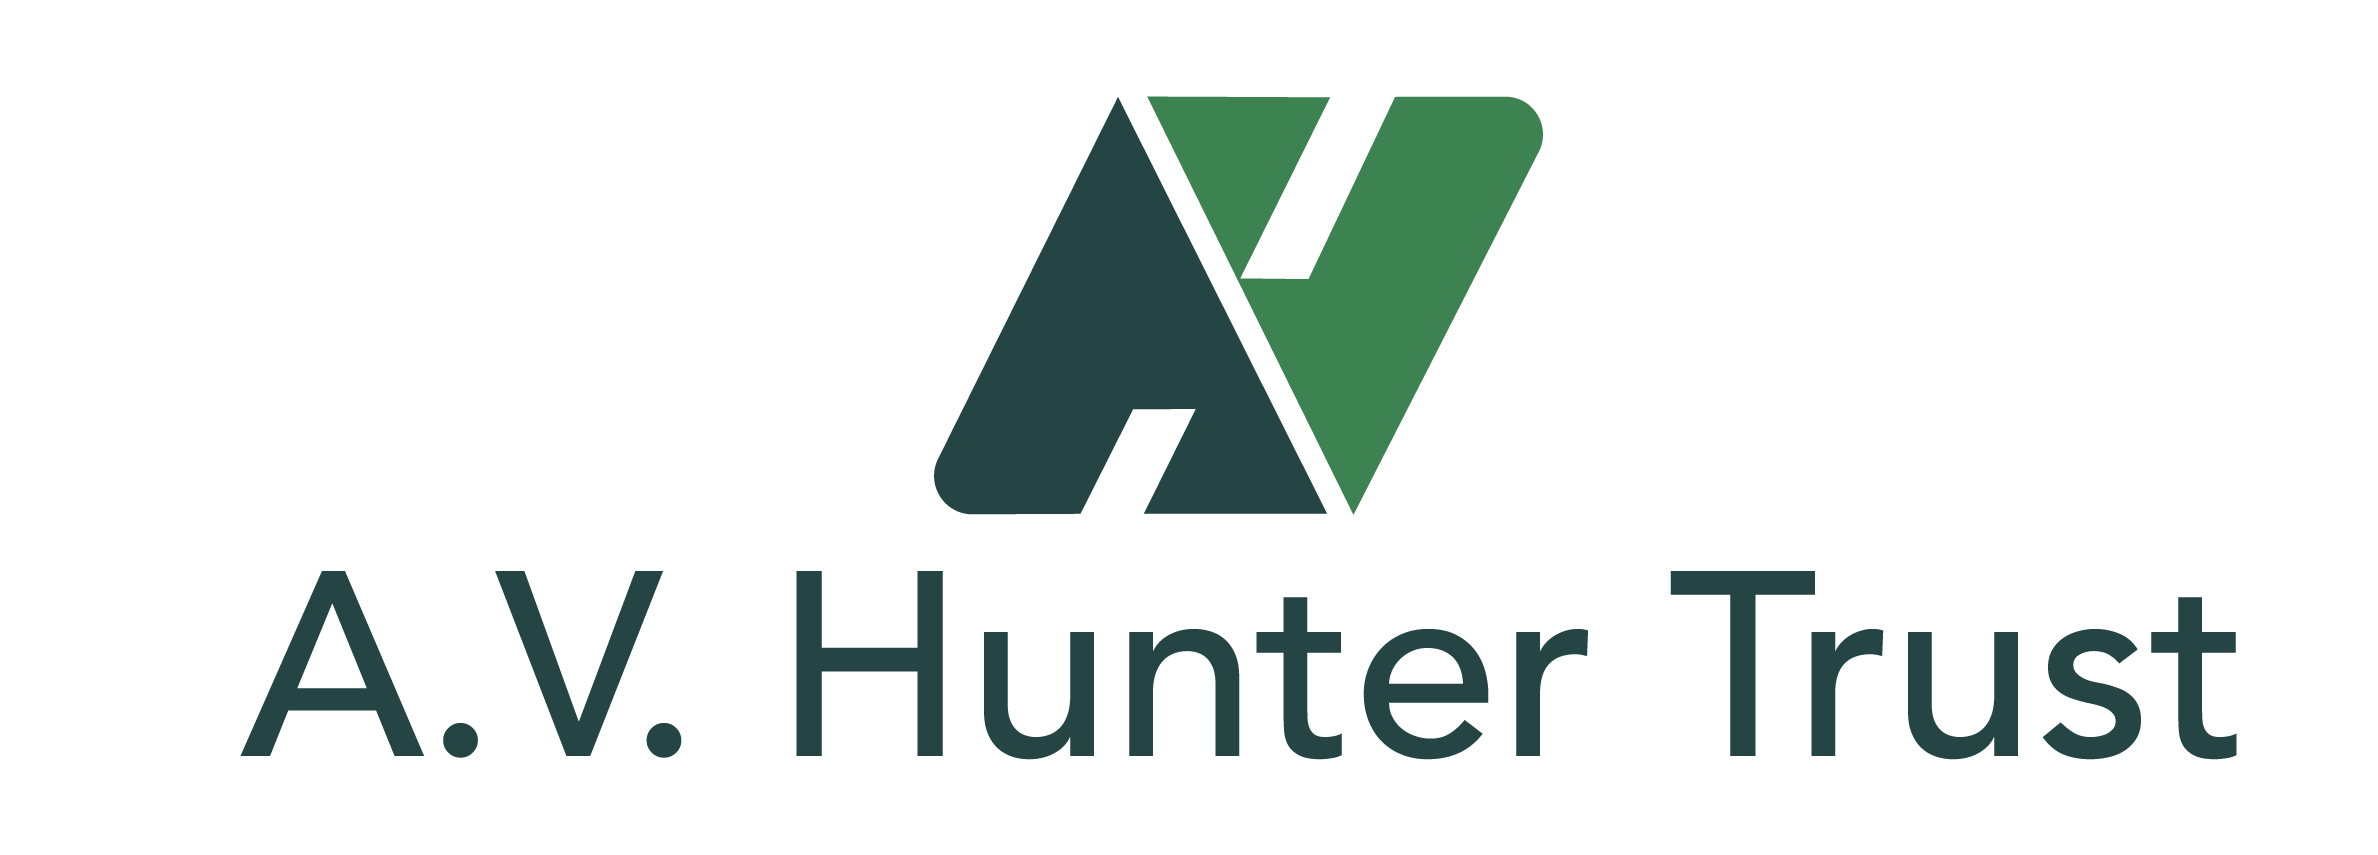 Stacked AV Hunter Trust logo